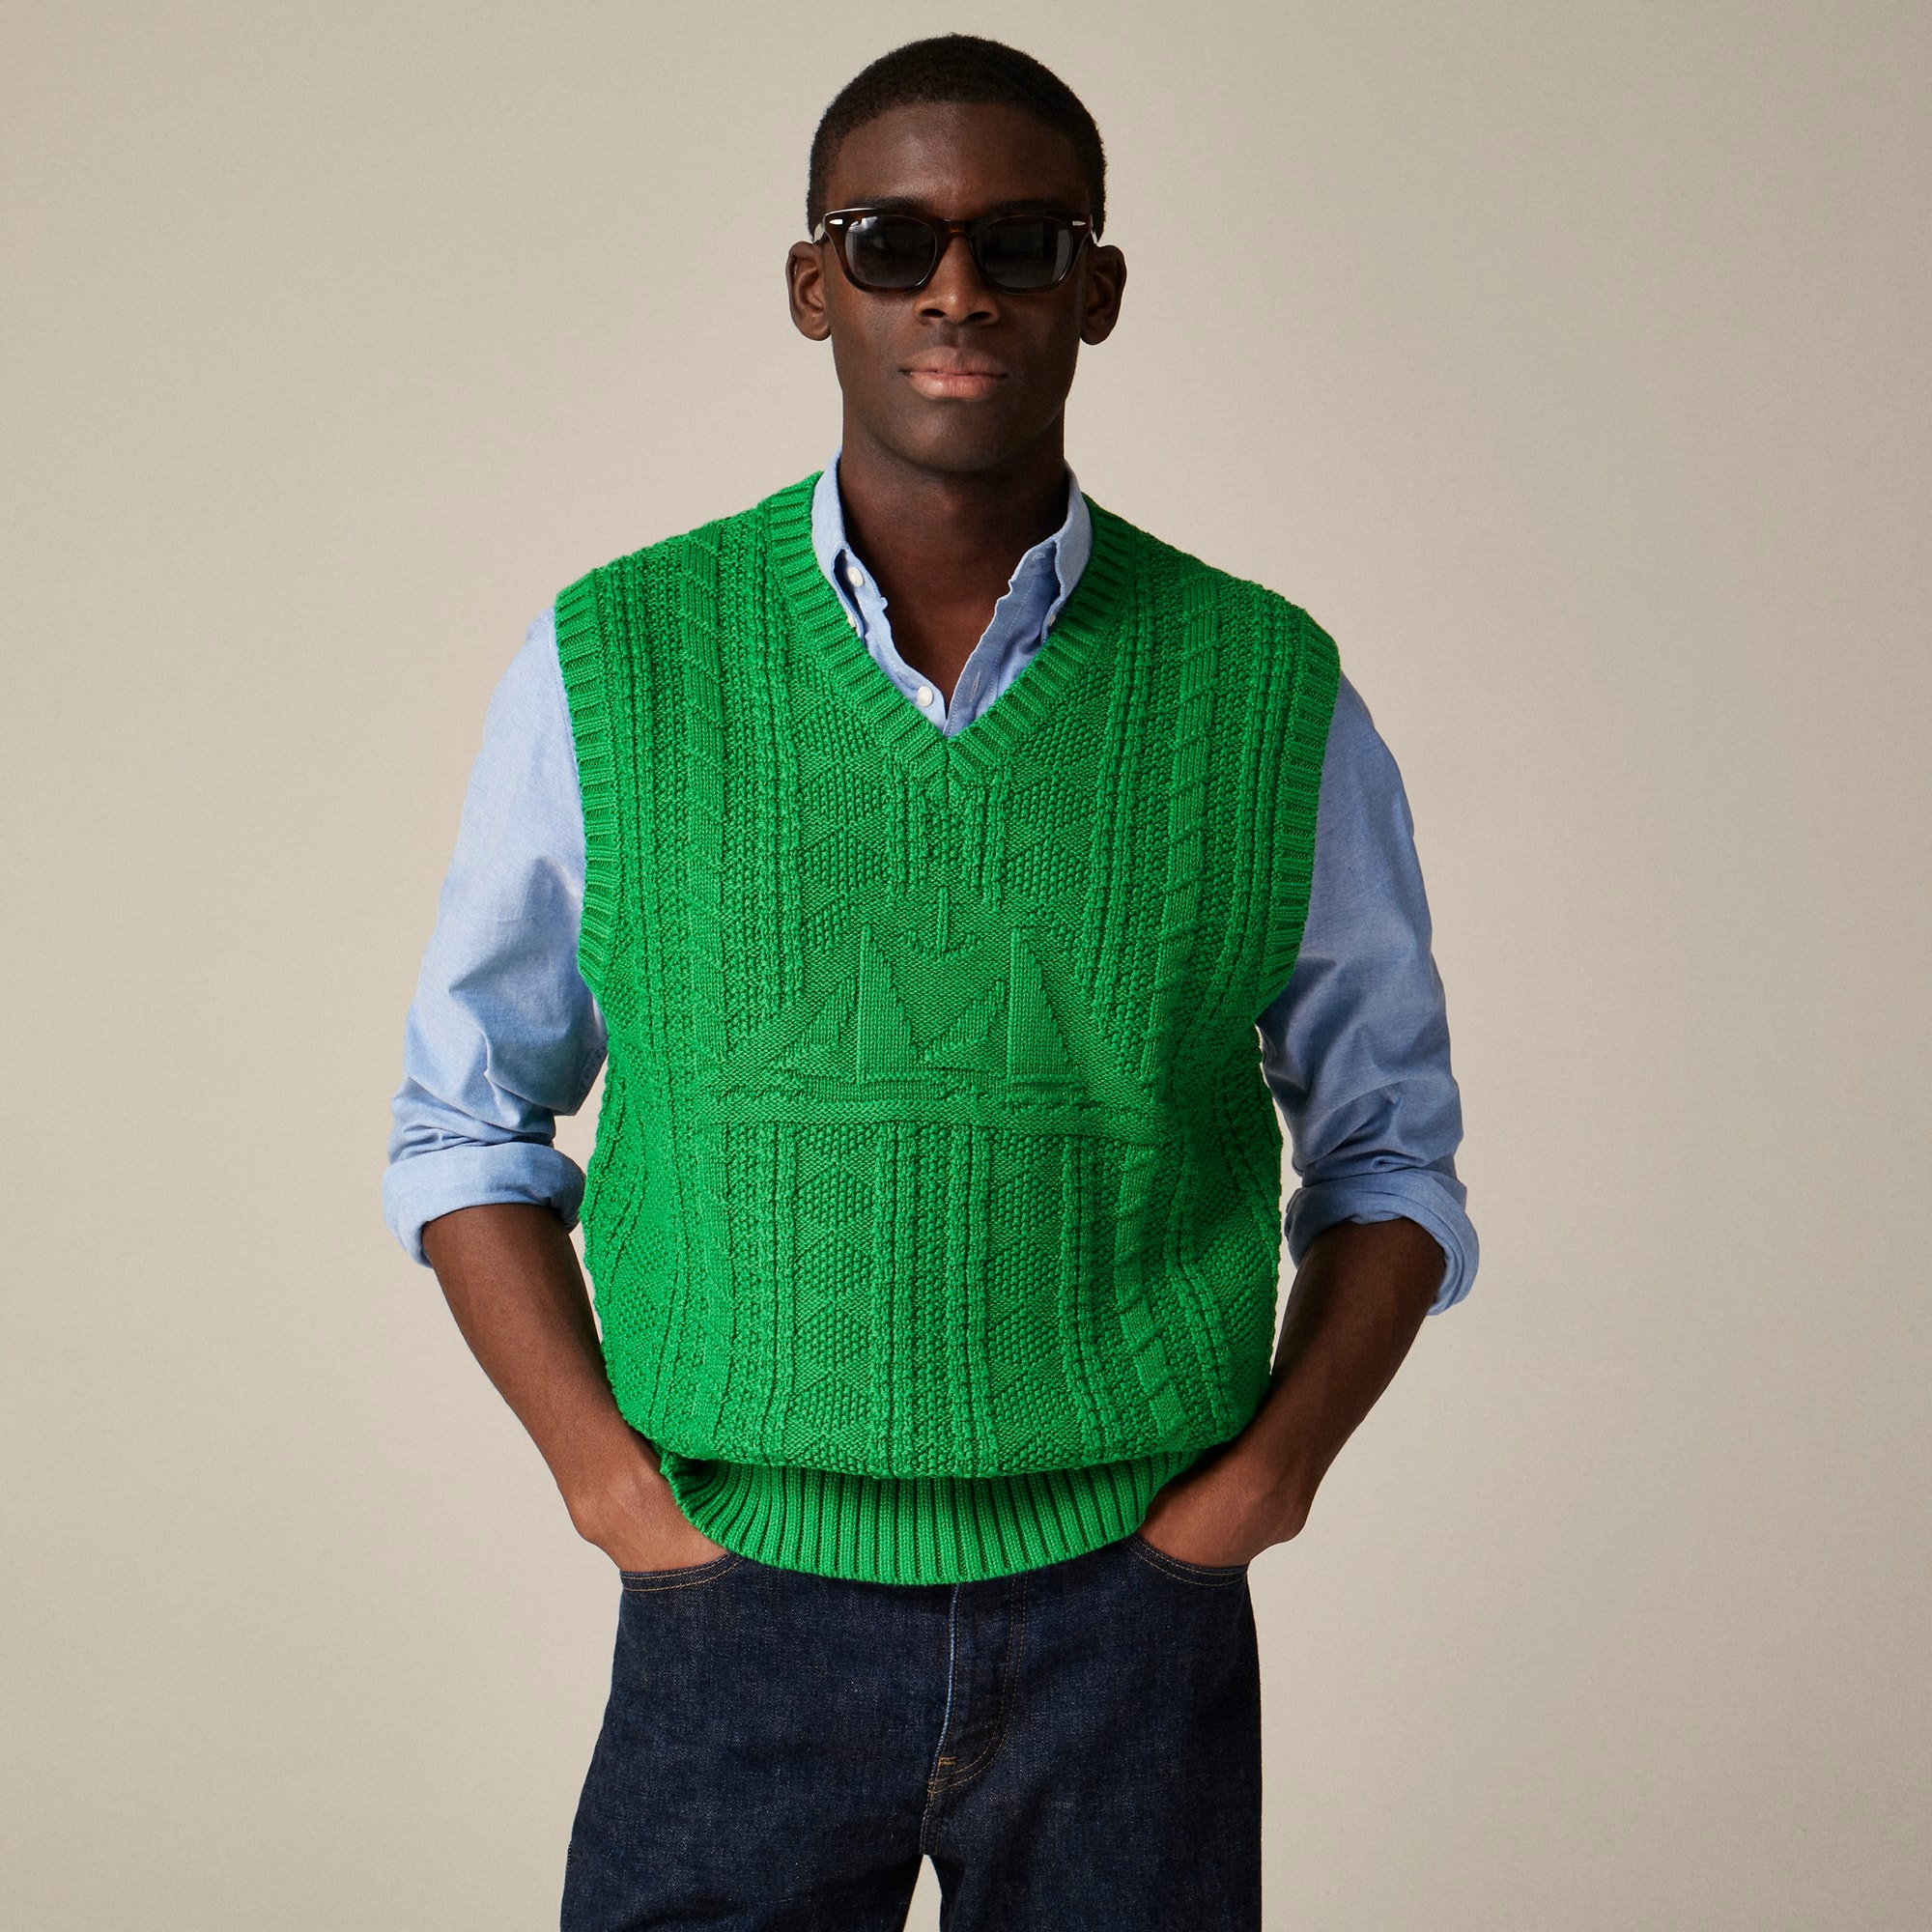  Cotton sweater-vest with sailboat motif